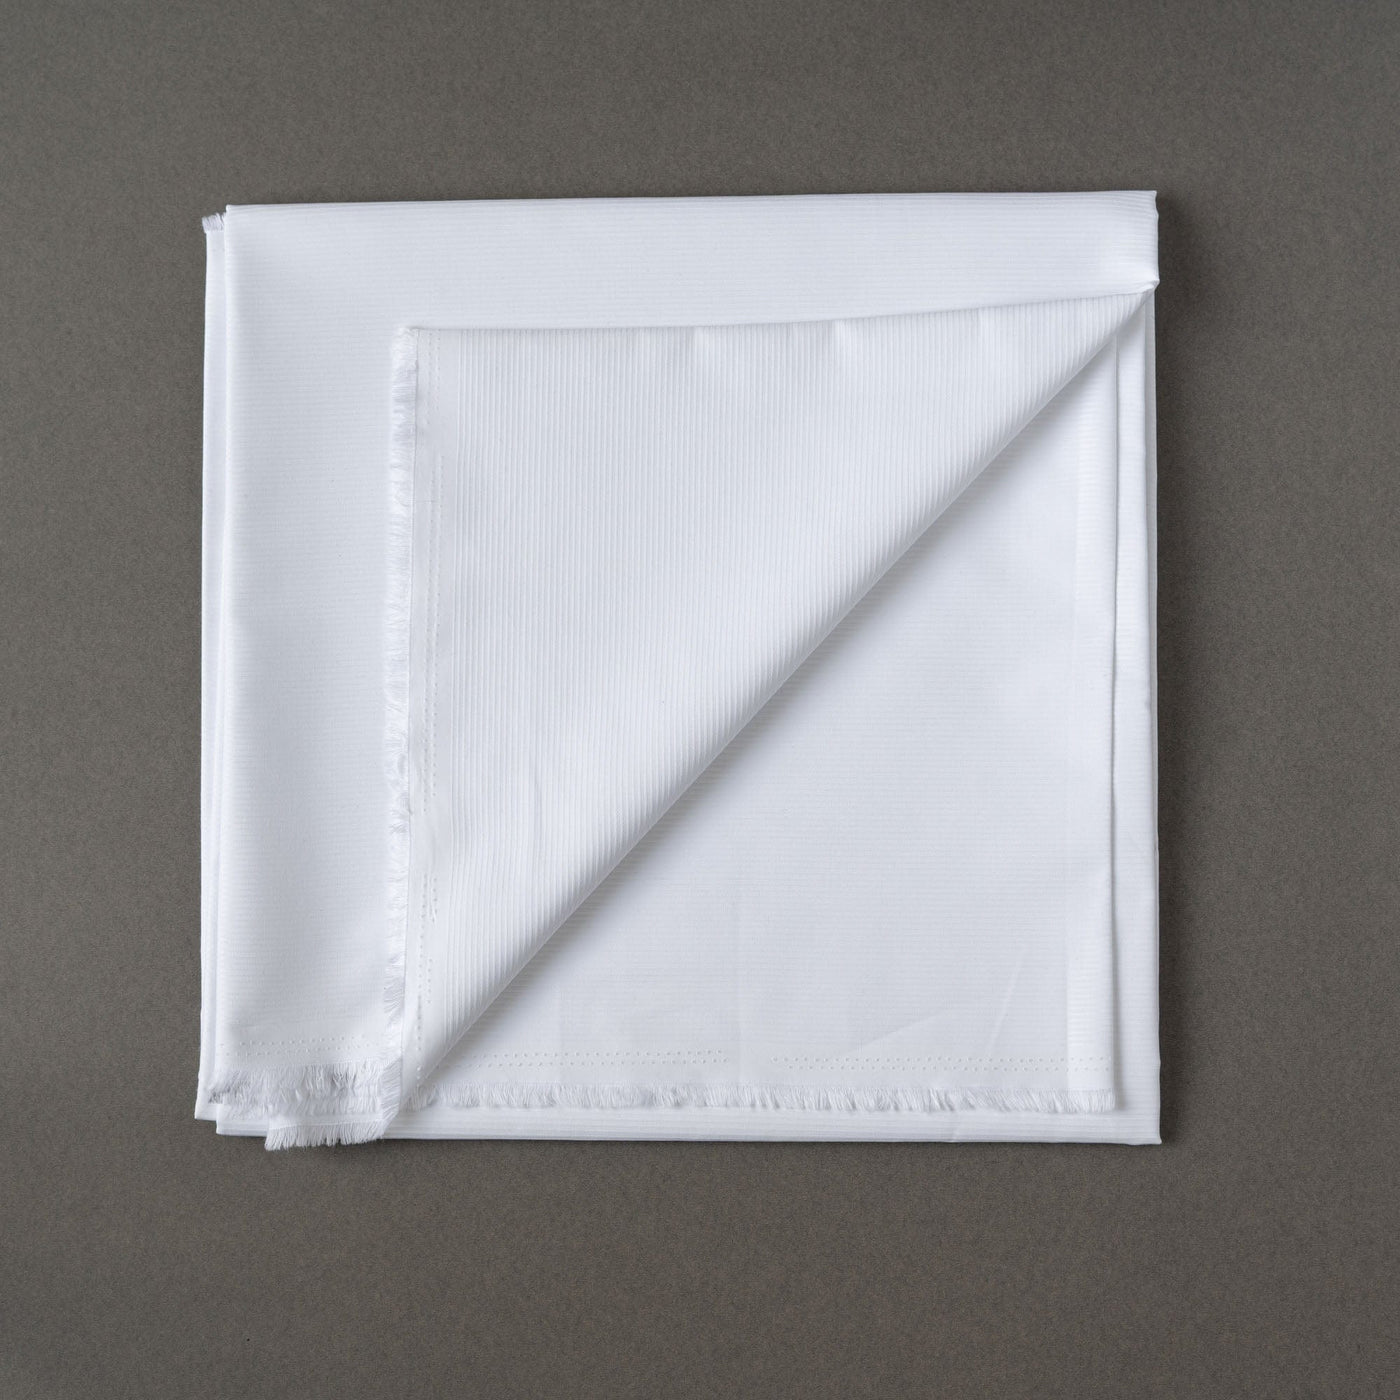 Fabric Pandit Fabric Men's White Geomettric Linings Pattern Cotton Satin Dobby Luxury Shirting Fabric (Width 58 inch)